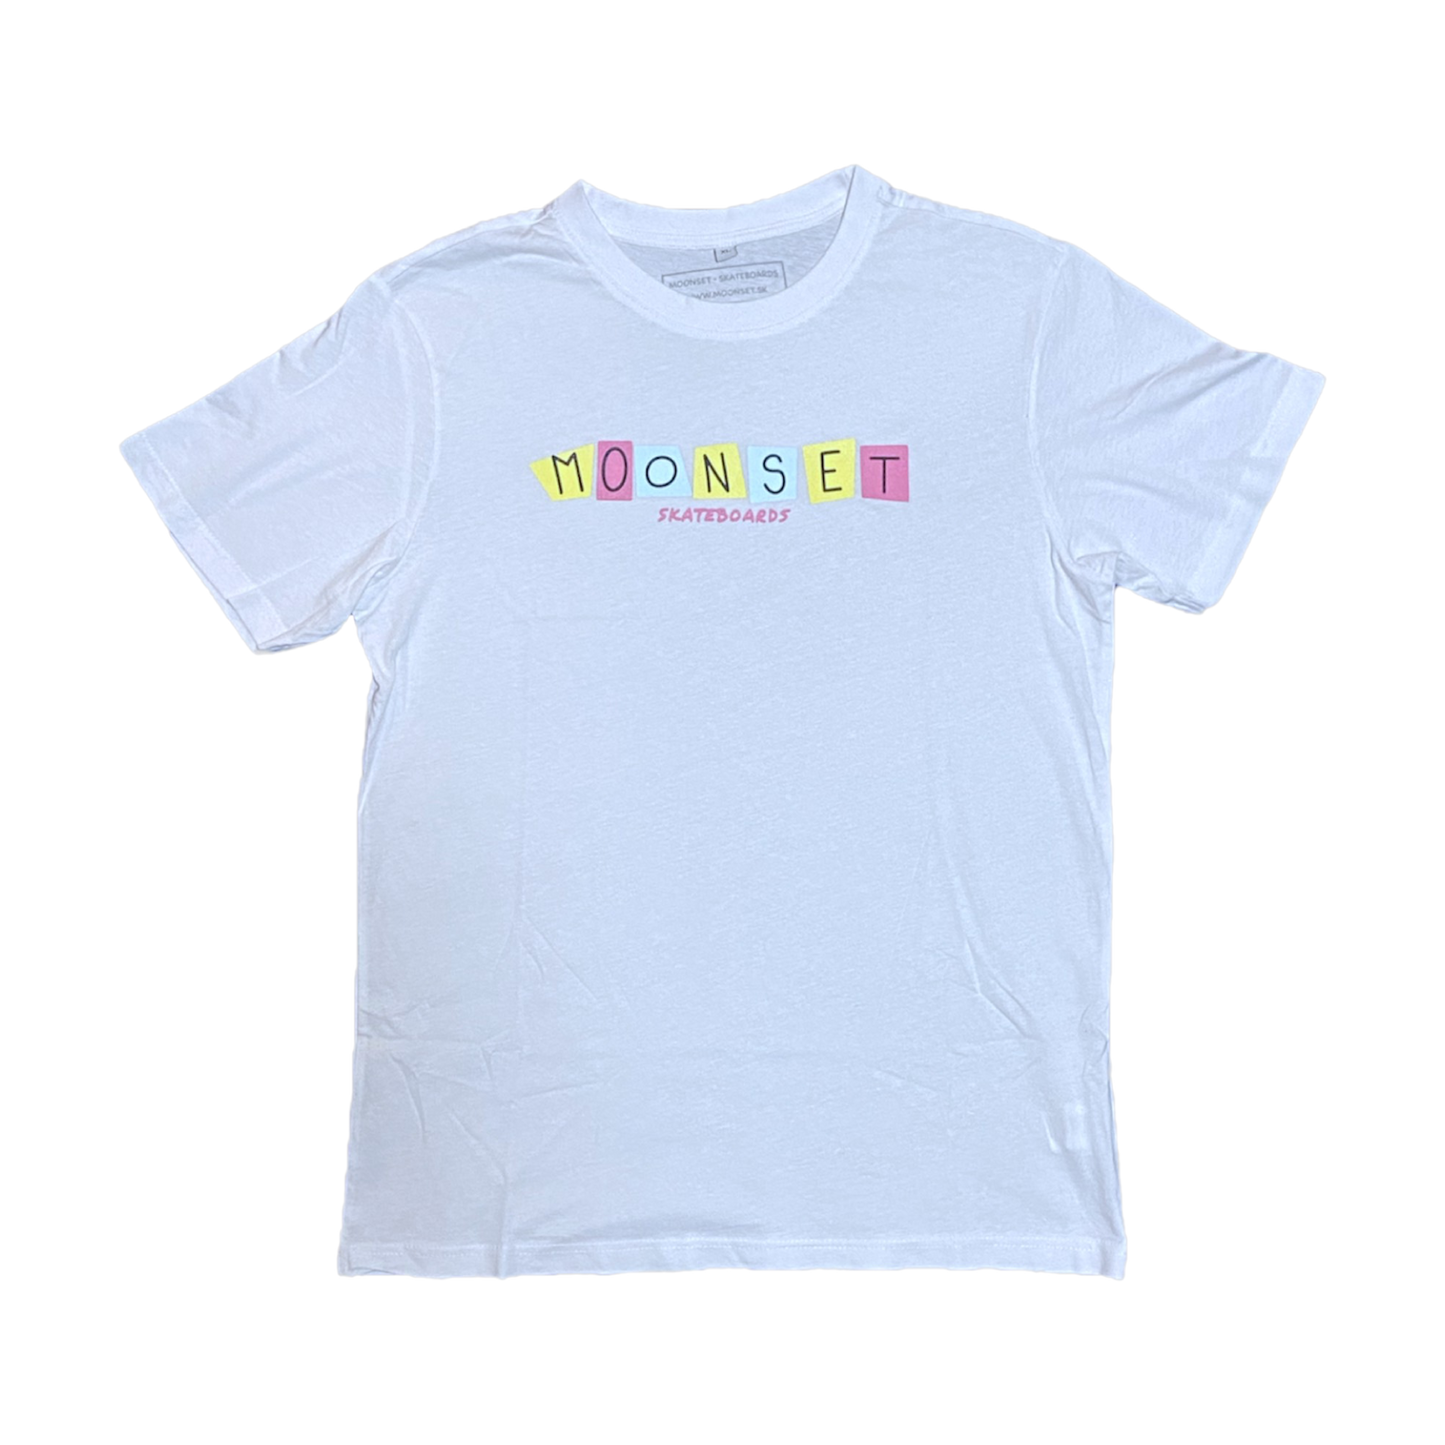 Moonset Pastel Dreams tričko